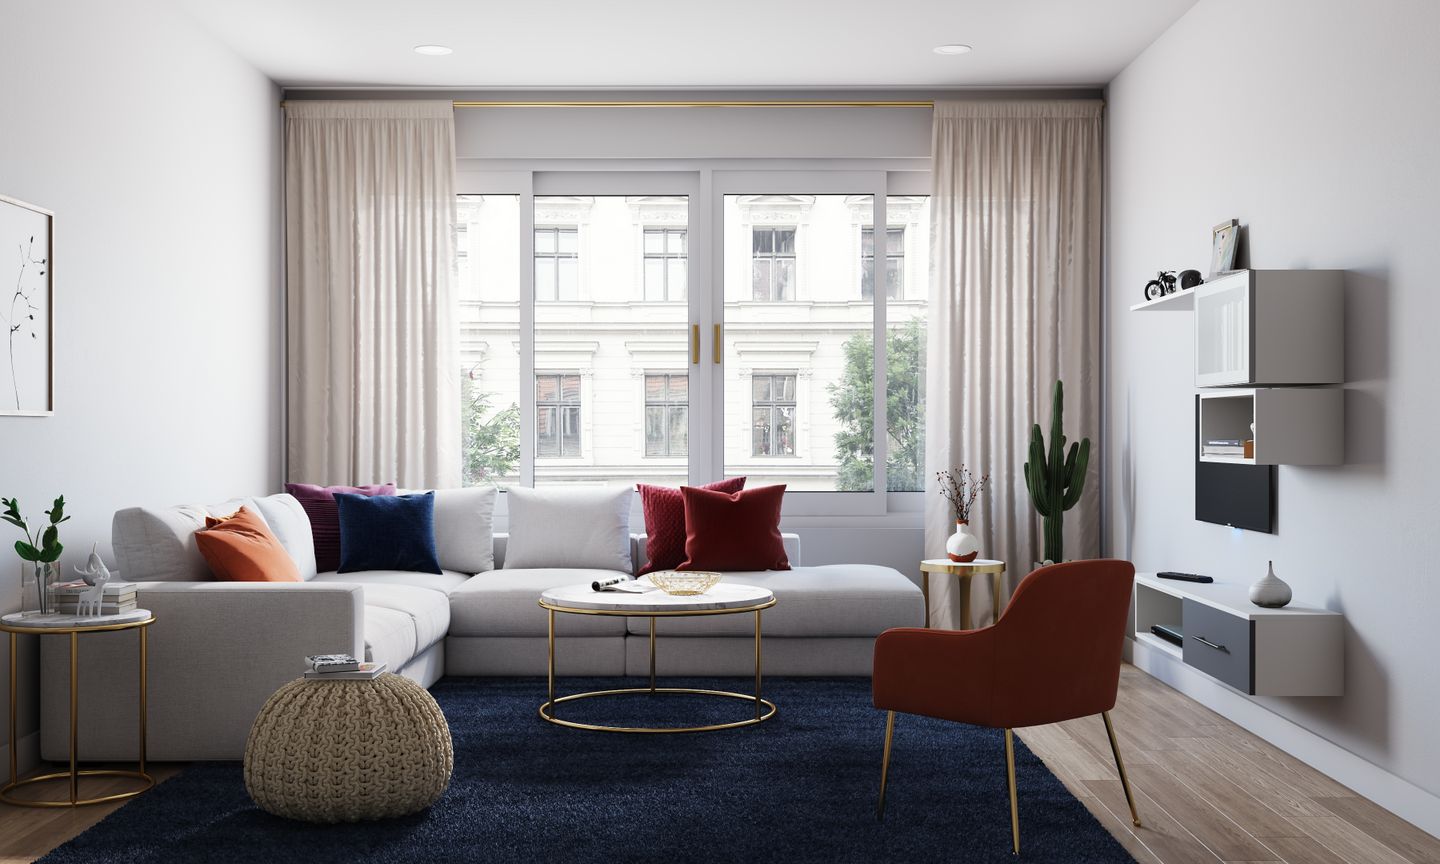 Minimalist Living Room Interior Design with L-Shaped Sofa - Livspace